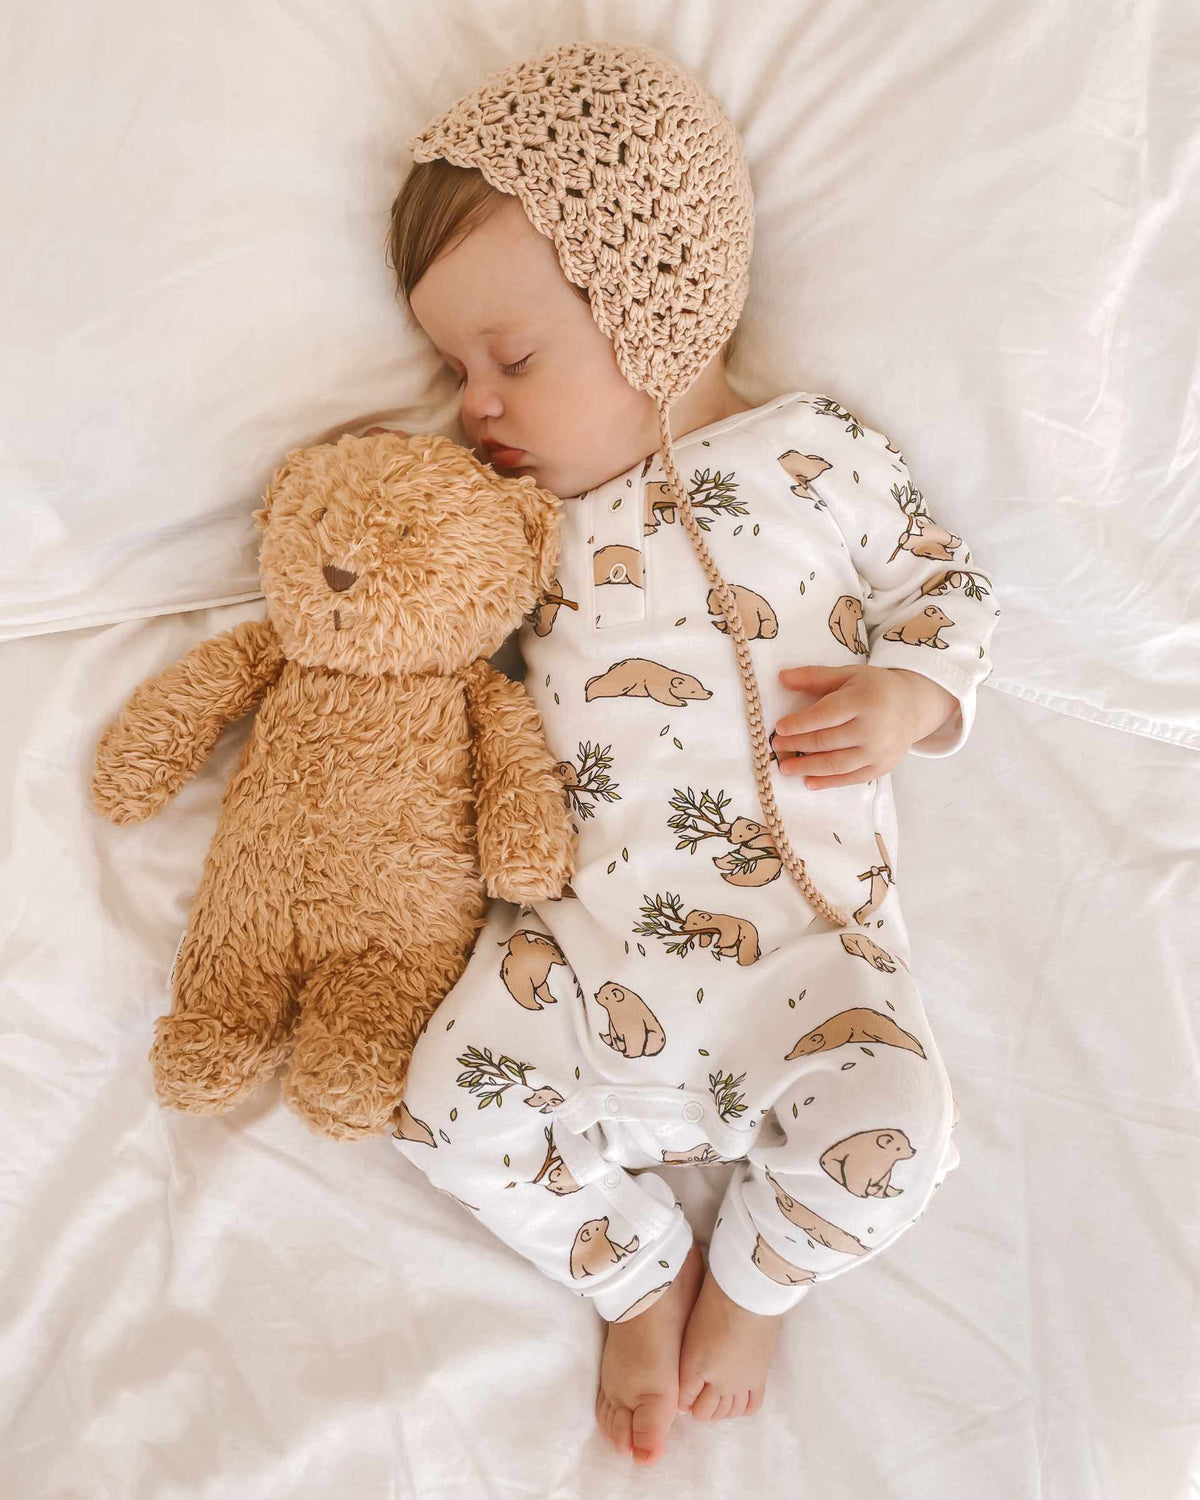 Baby in bear romper with teddy bear